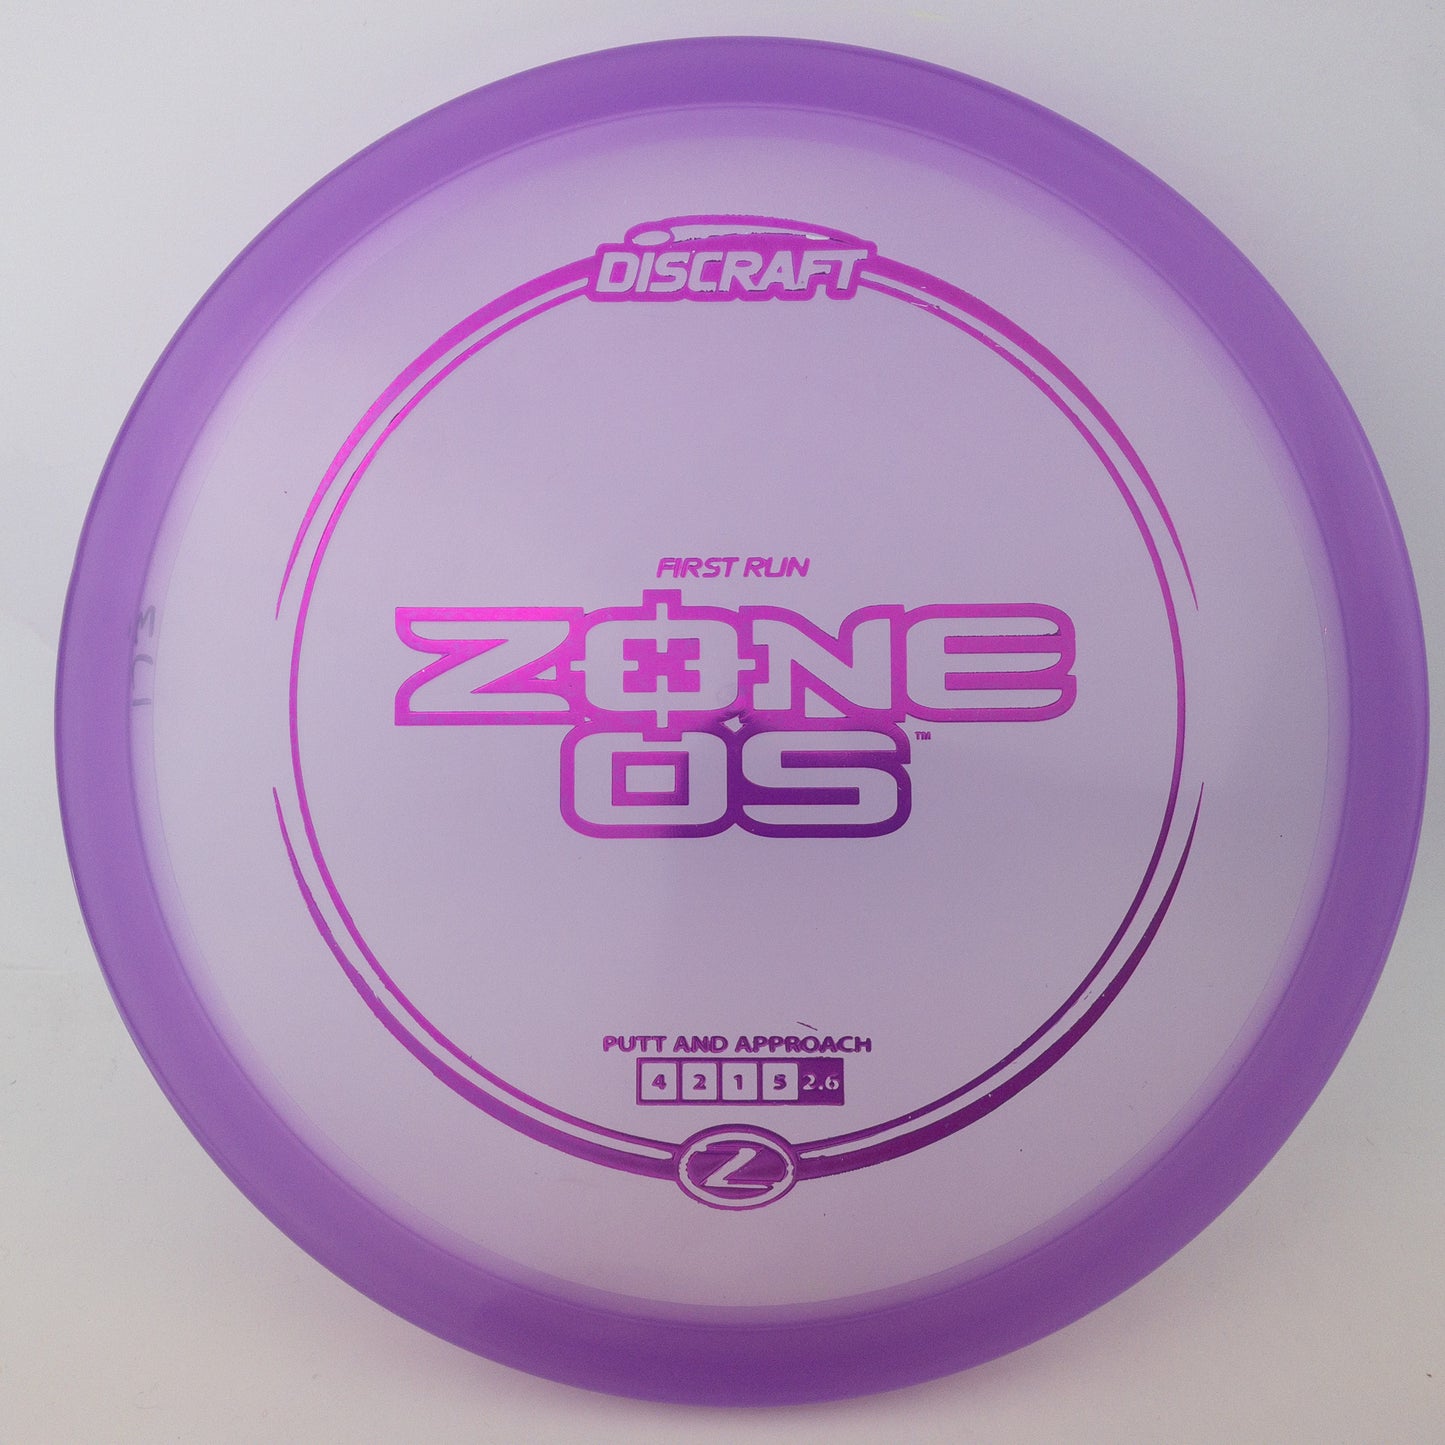 Discraft Z-Line Zone OS - First Run